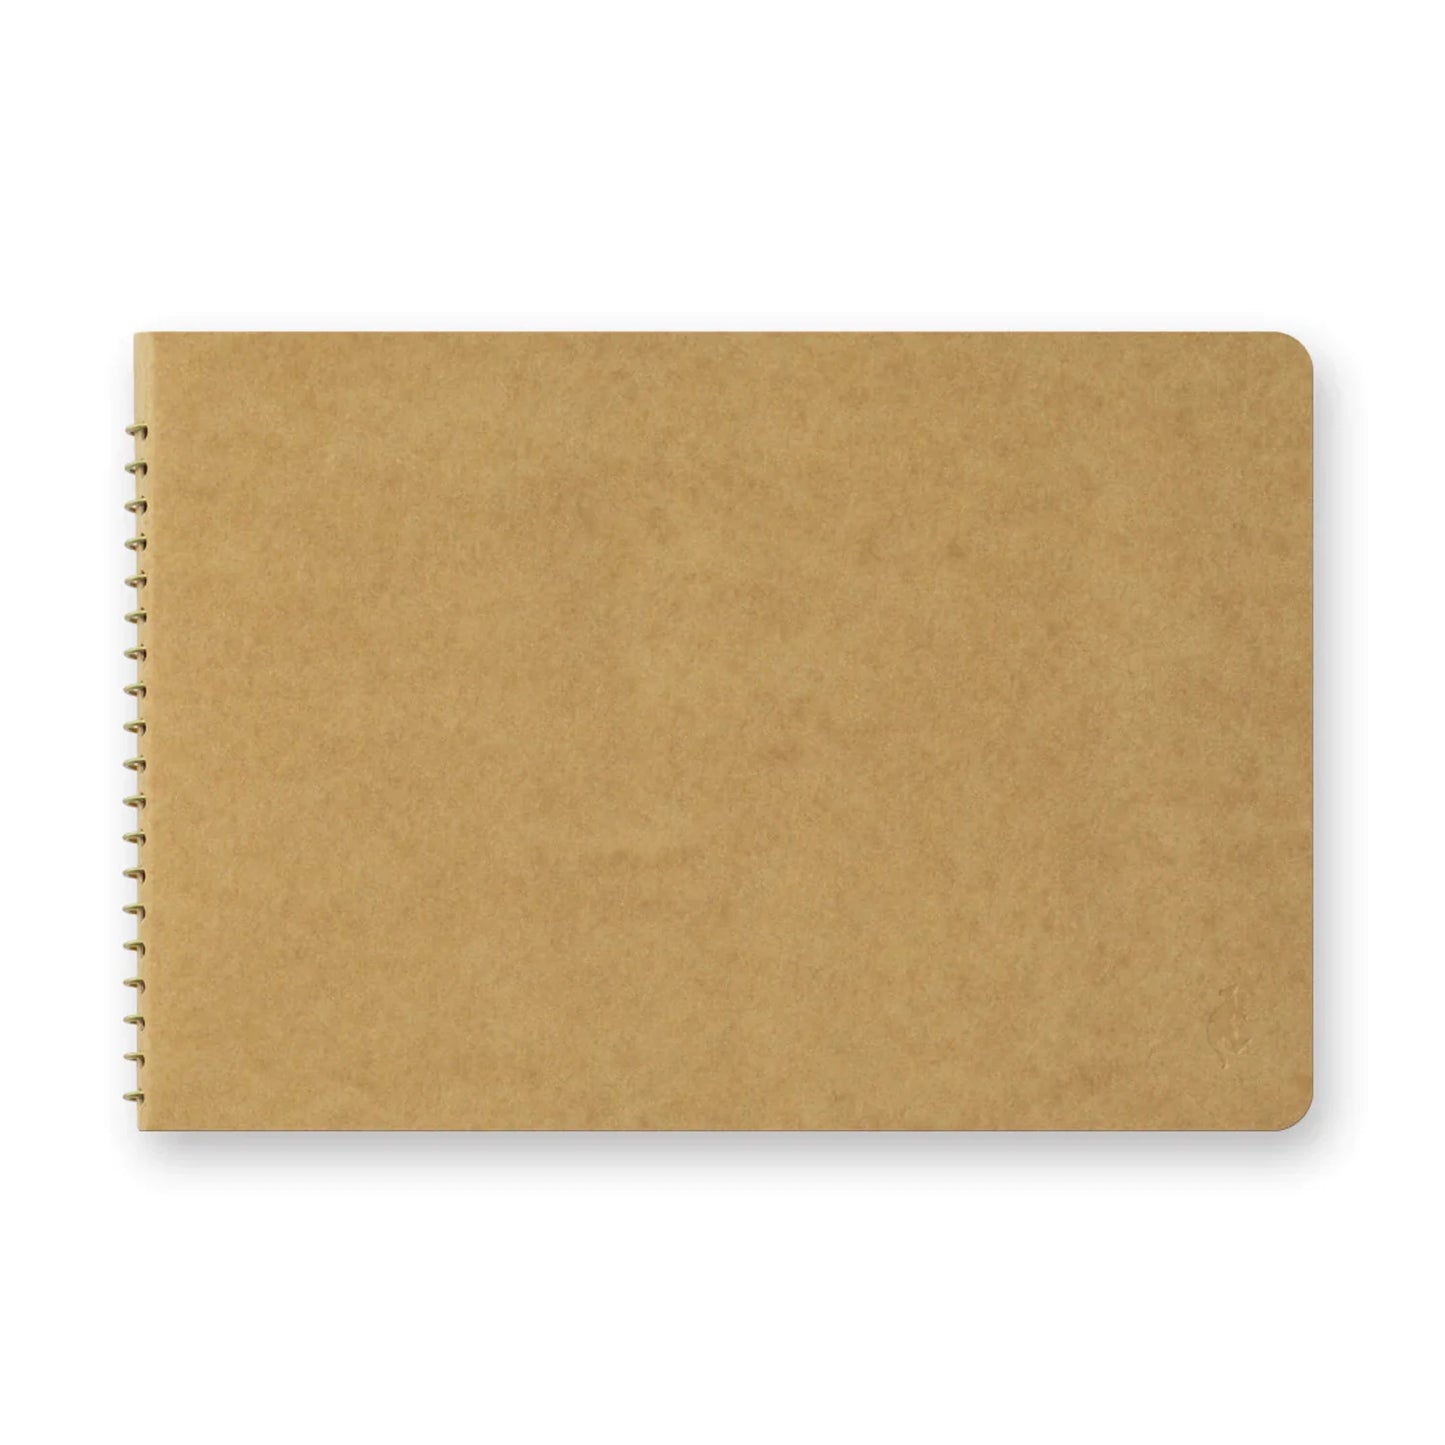 Traveler's Company Spiral Ring Notebook B6, Paper Pocket